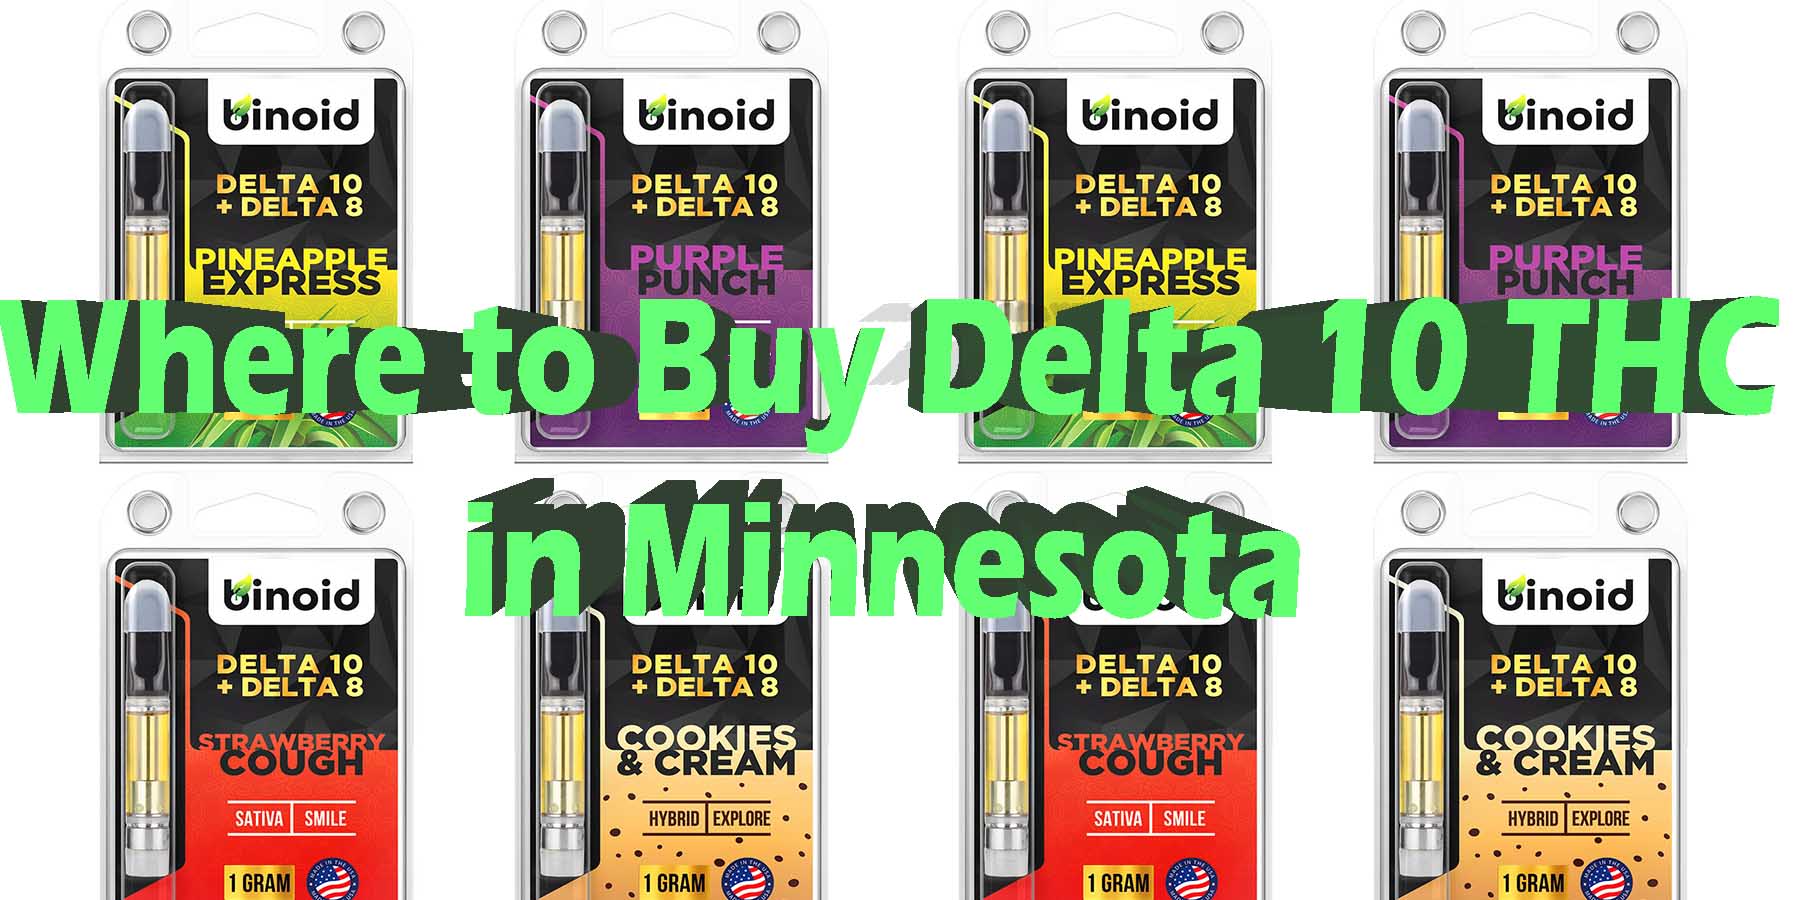 Where to Buy Delta 10 THC in Minnesota Discount For Smoking High Smoke Shop Online Near Me Strongest Binoid Buy Online BestPlace LowestPrice Binoid